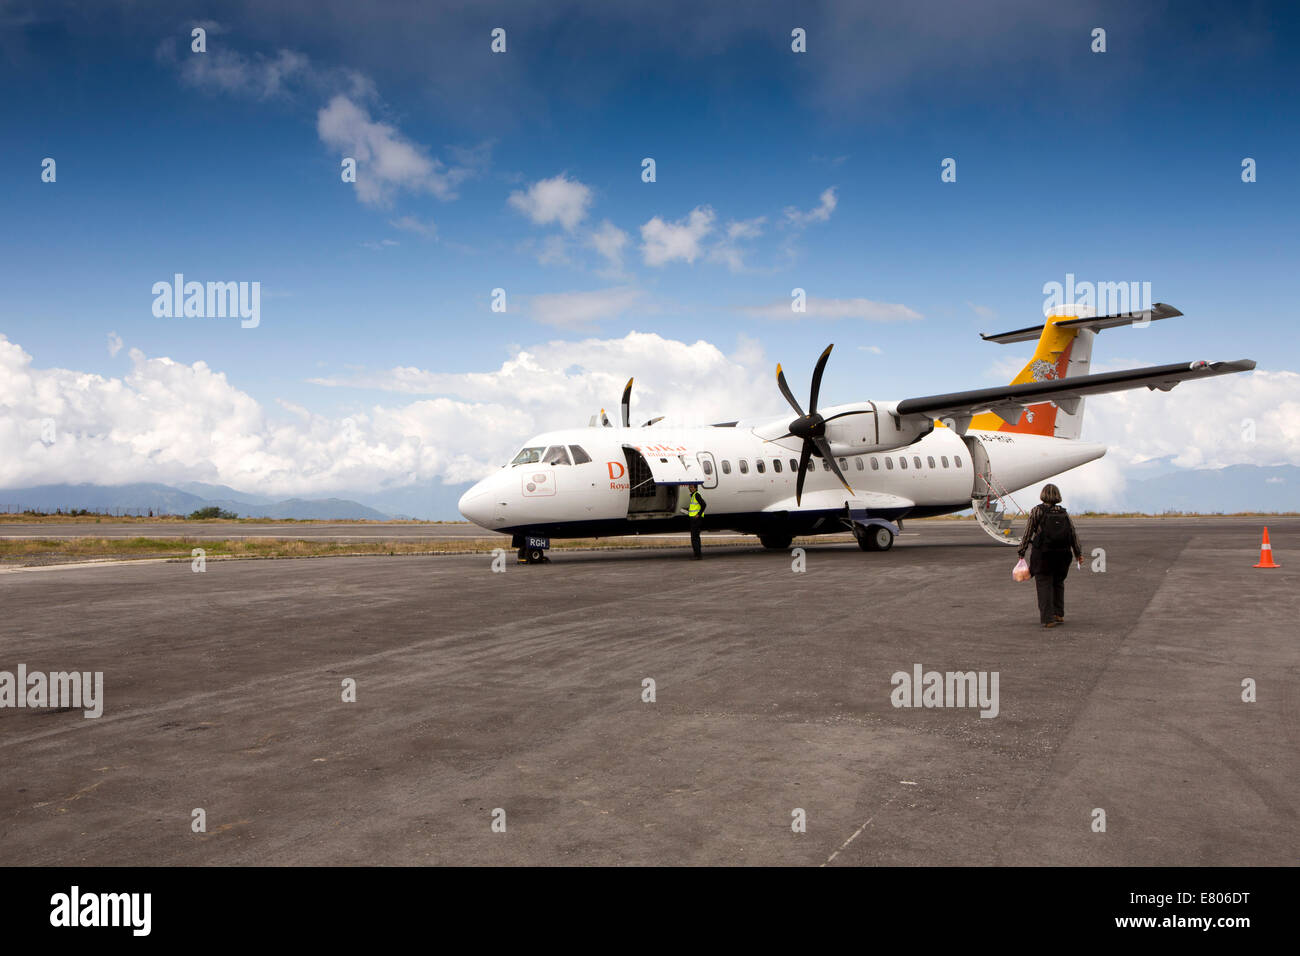 Eastern Bhutan, Yongphula, Airport Druk Air ATR 42-500 aircraft on apron at high altitude runway Stock Photo